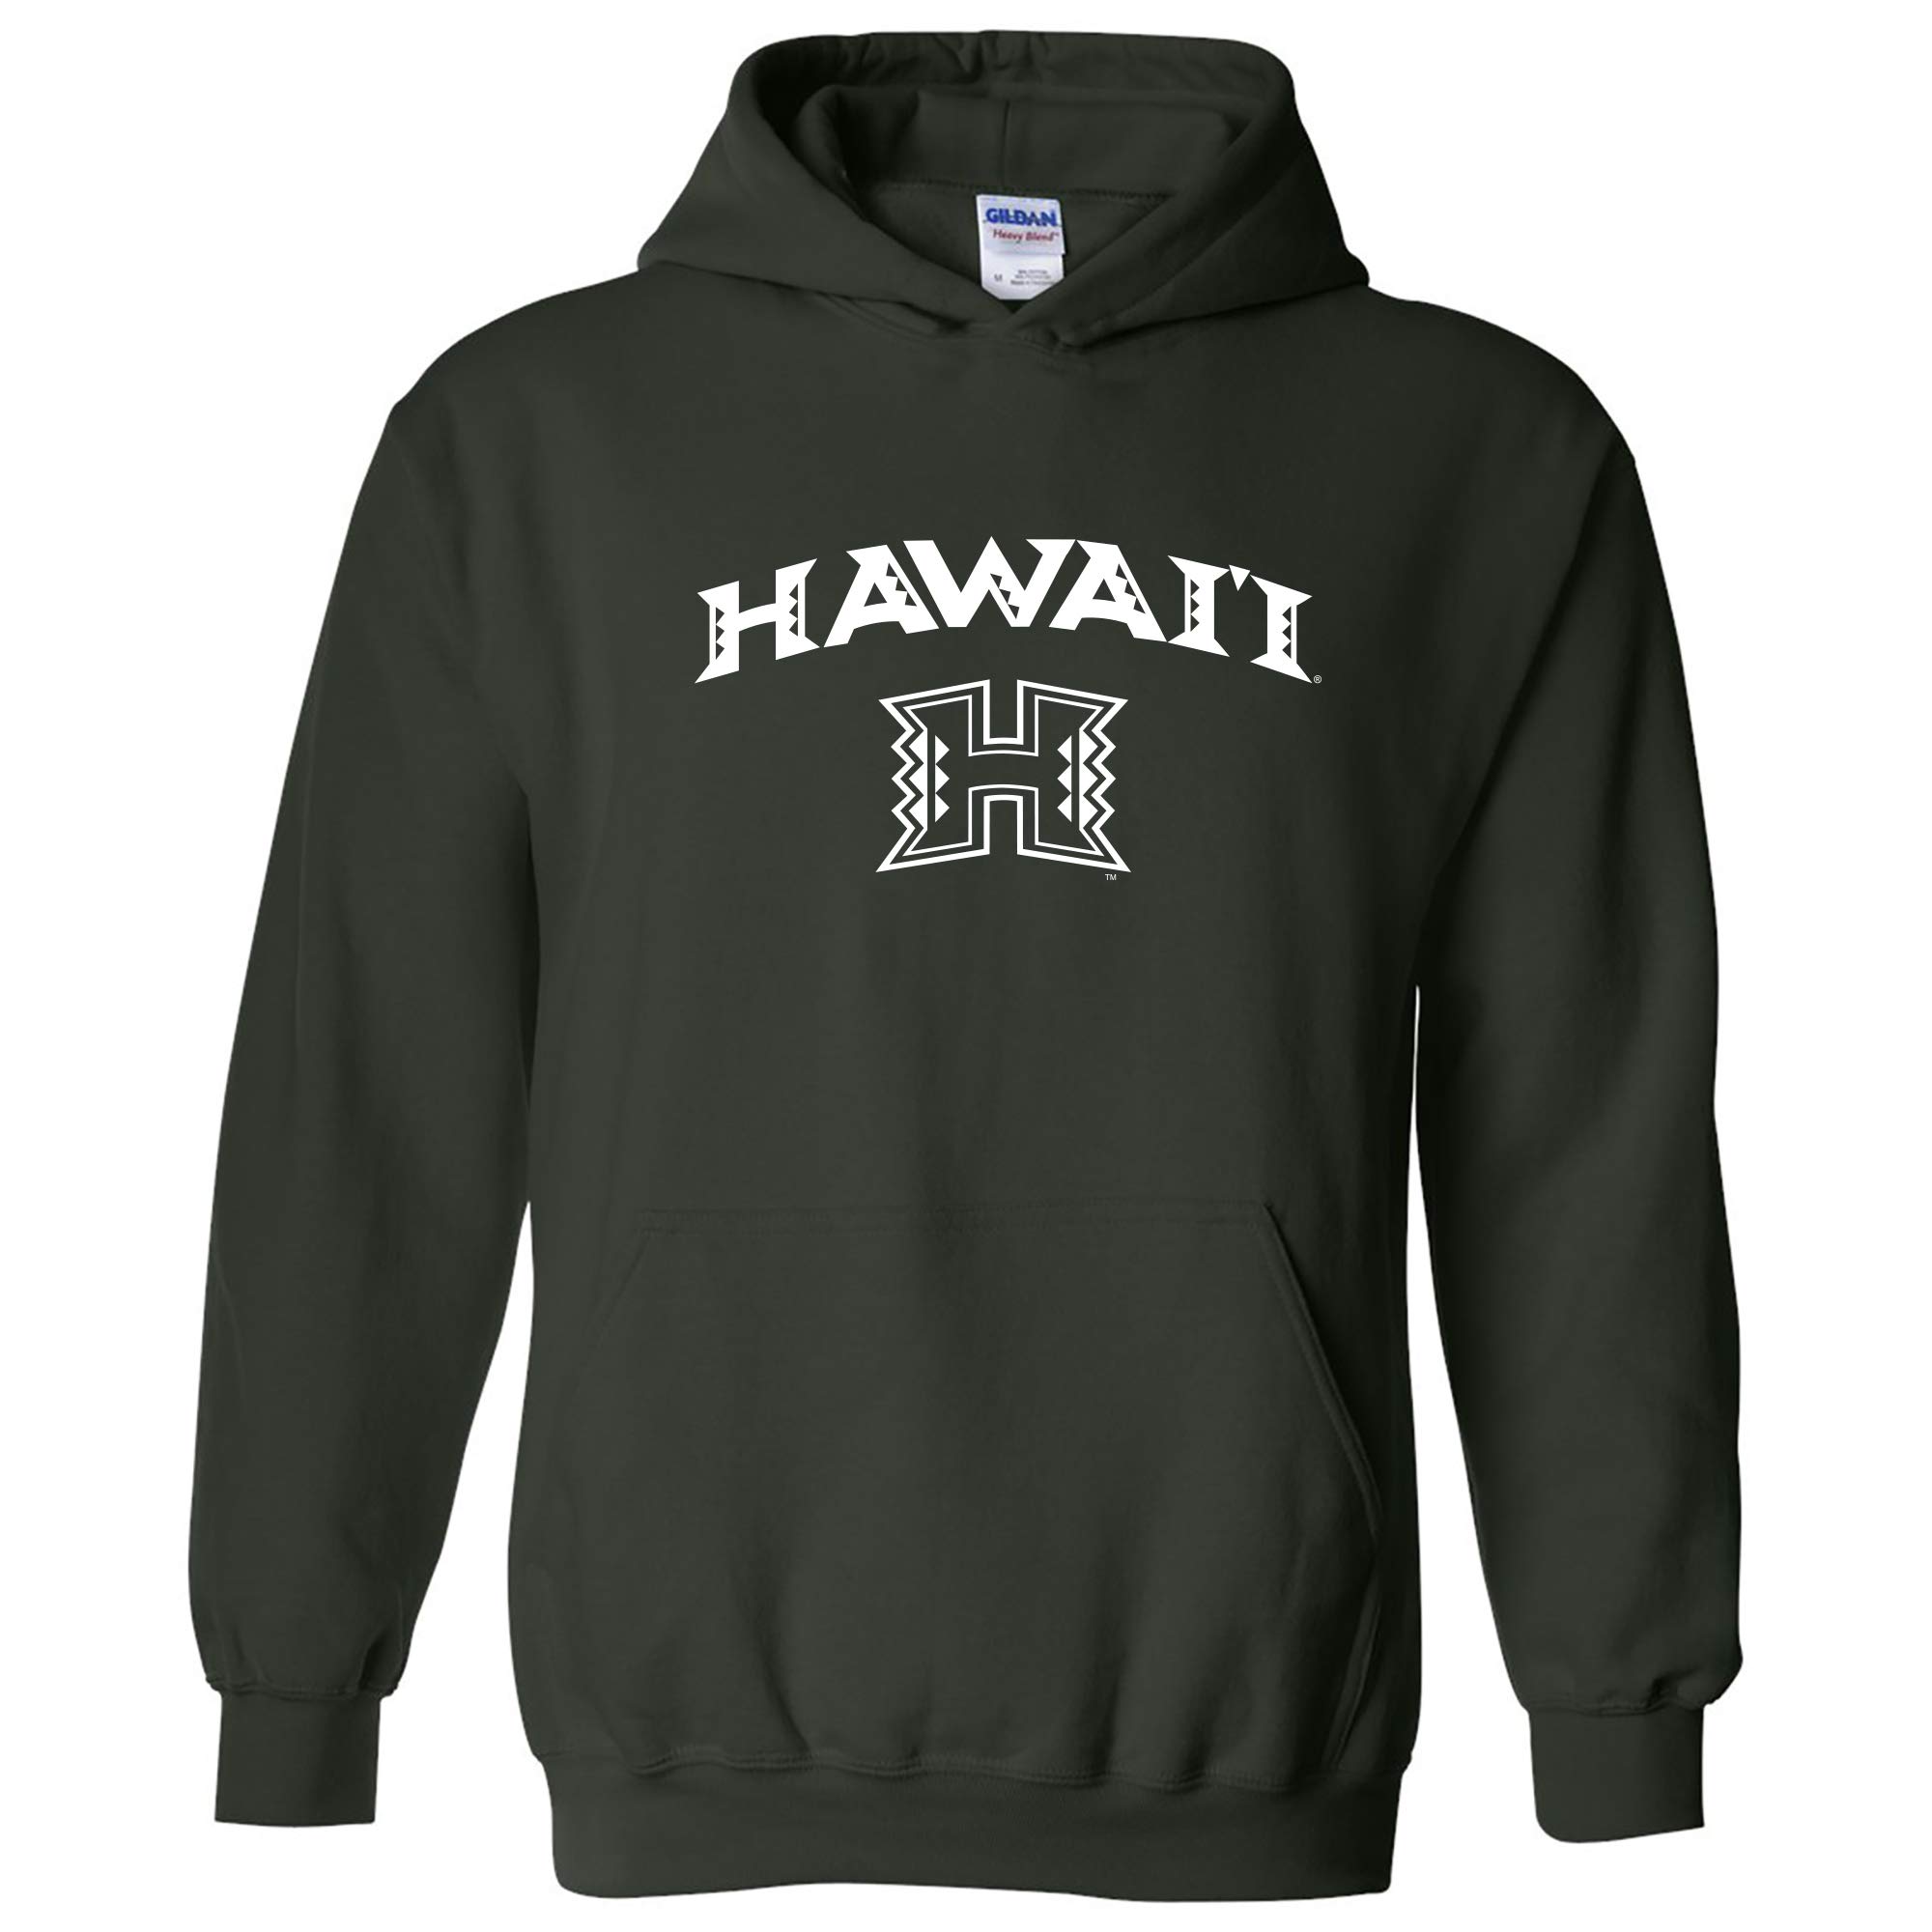 UGP Campus Apparel AH03 - Hawaii Rainbow Warriors Arch Logo Hoodie - 2X-Large - Forest